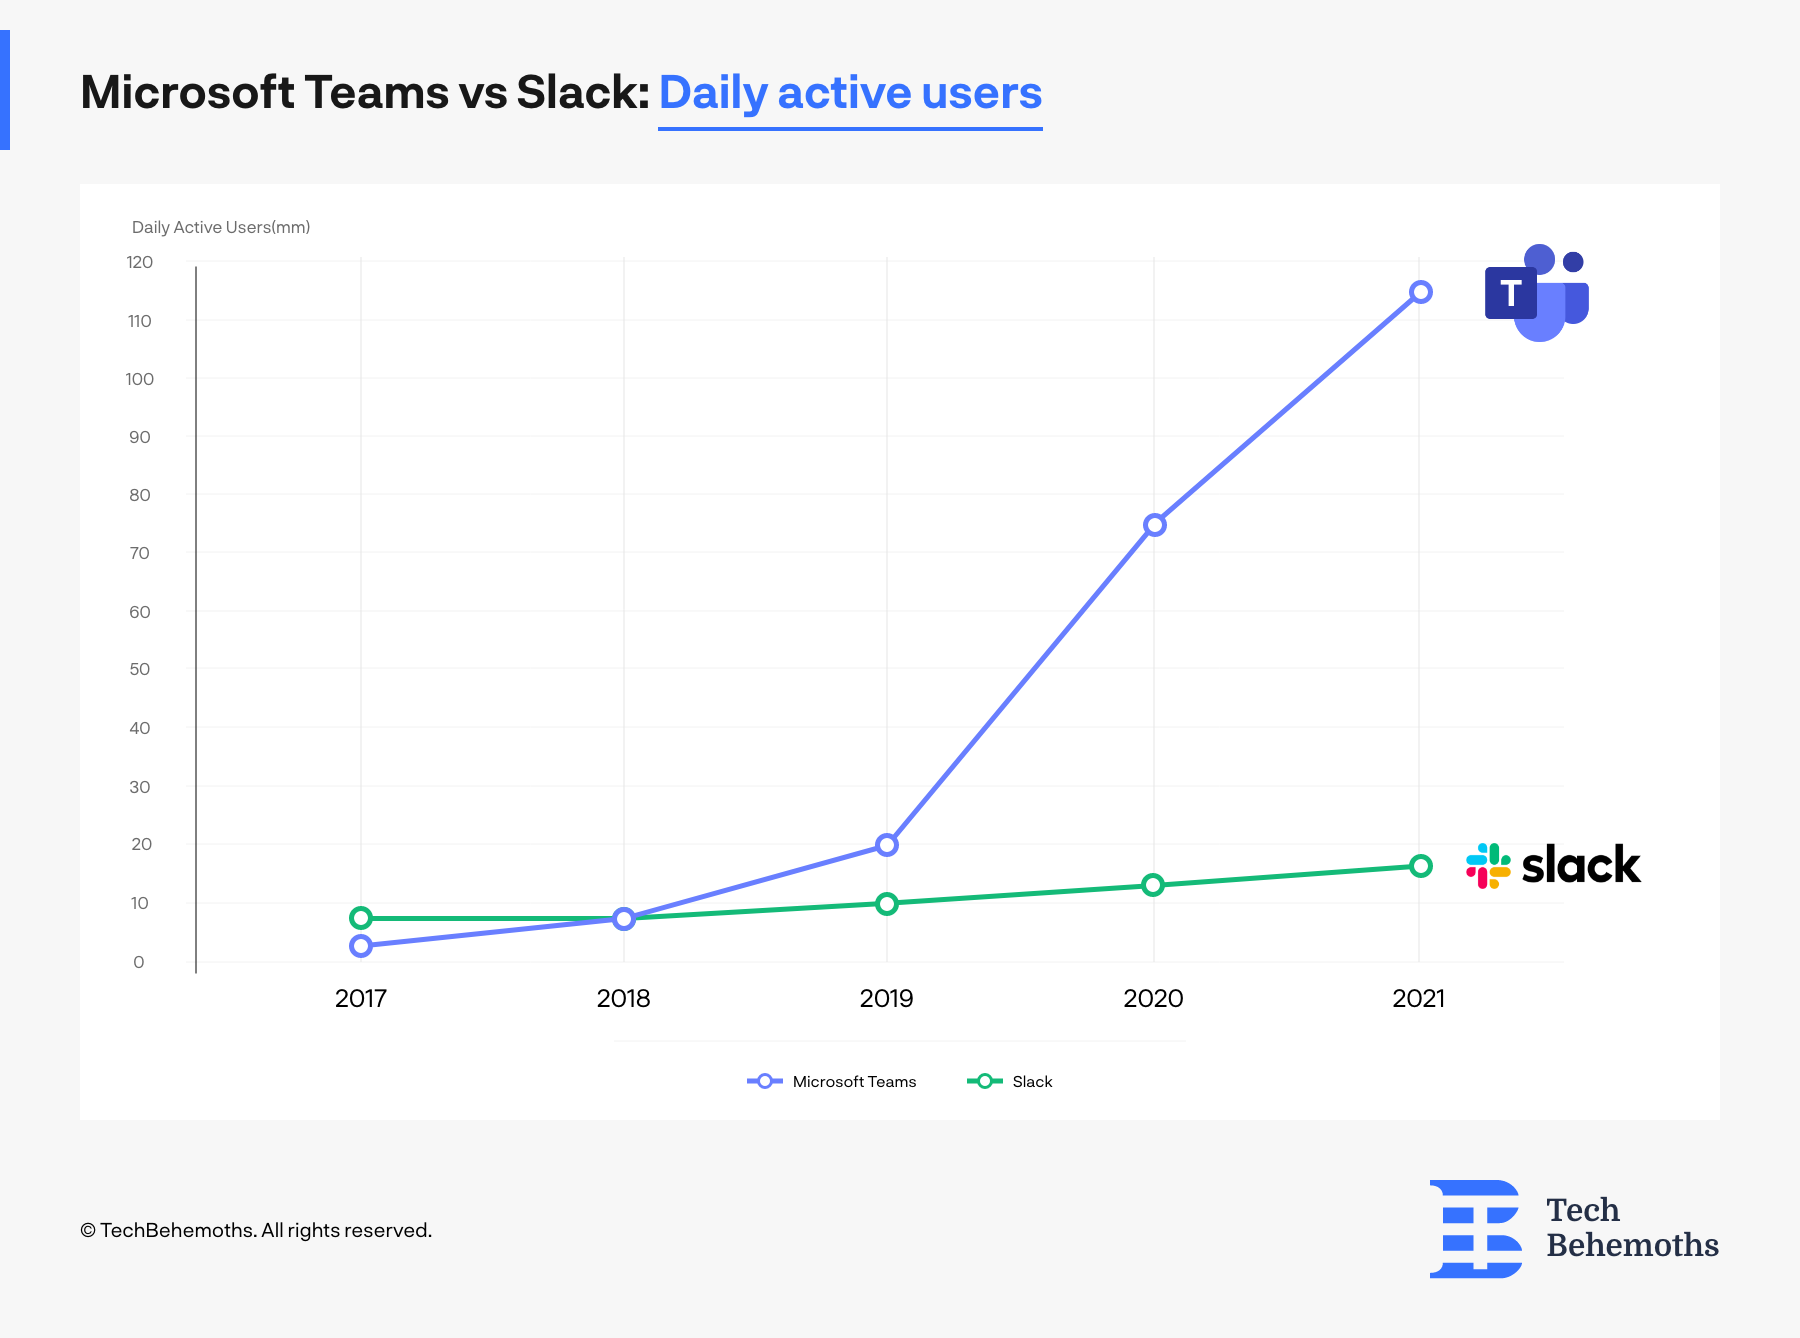 Microsoft Teams vs Slack Daily Active Users